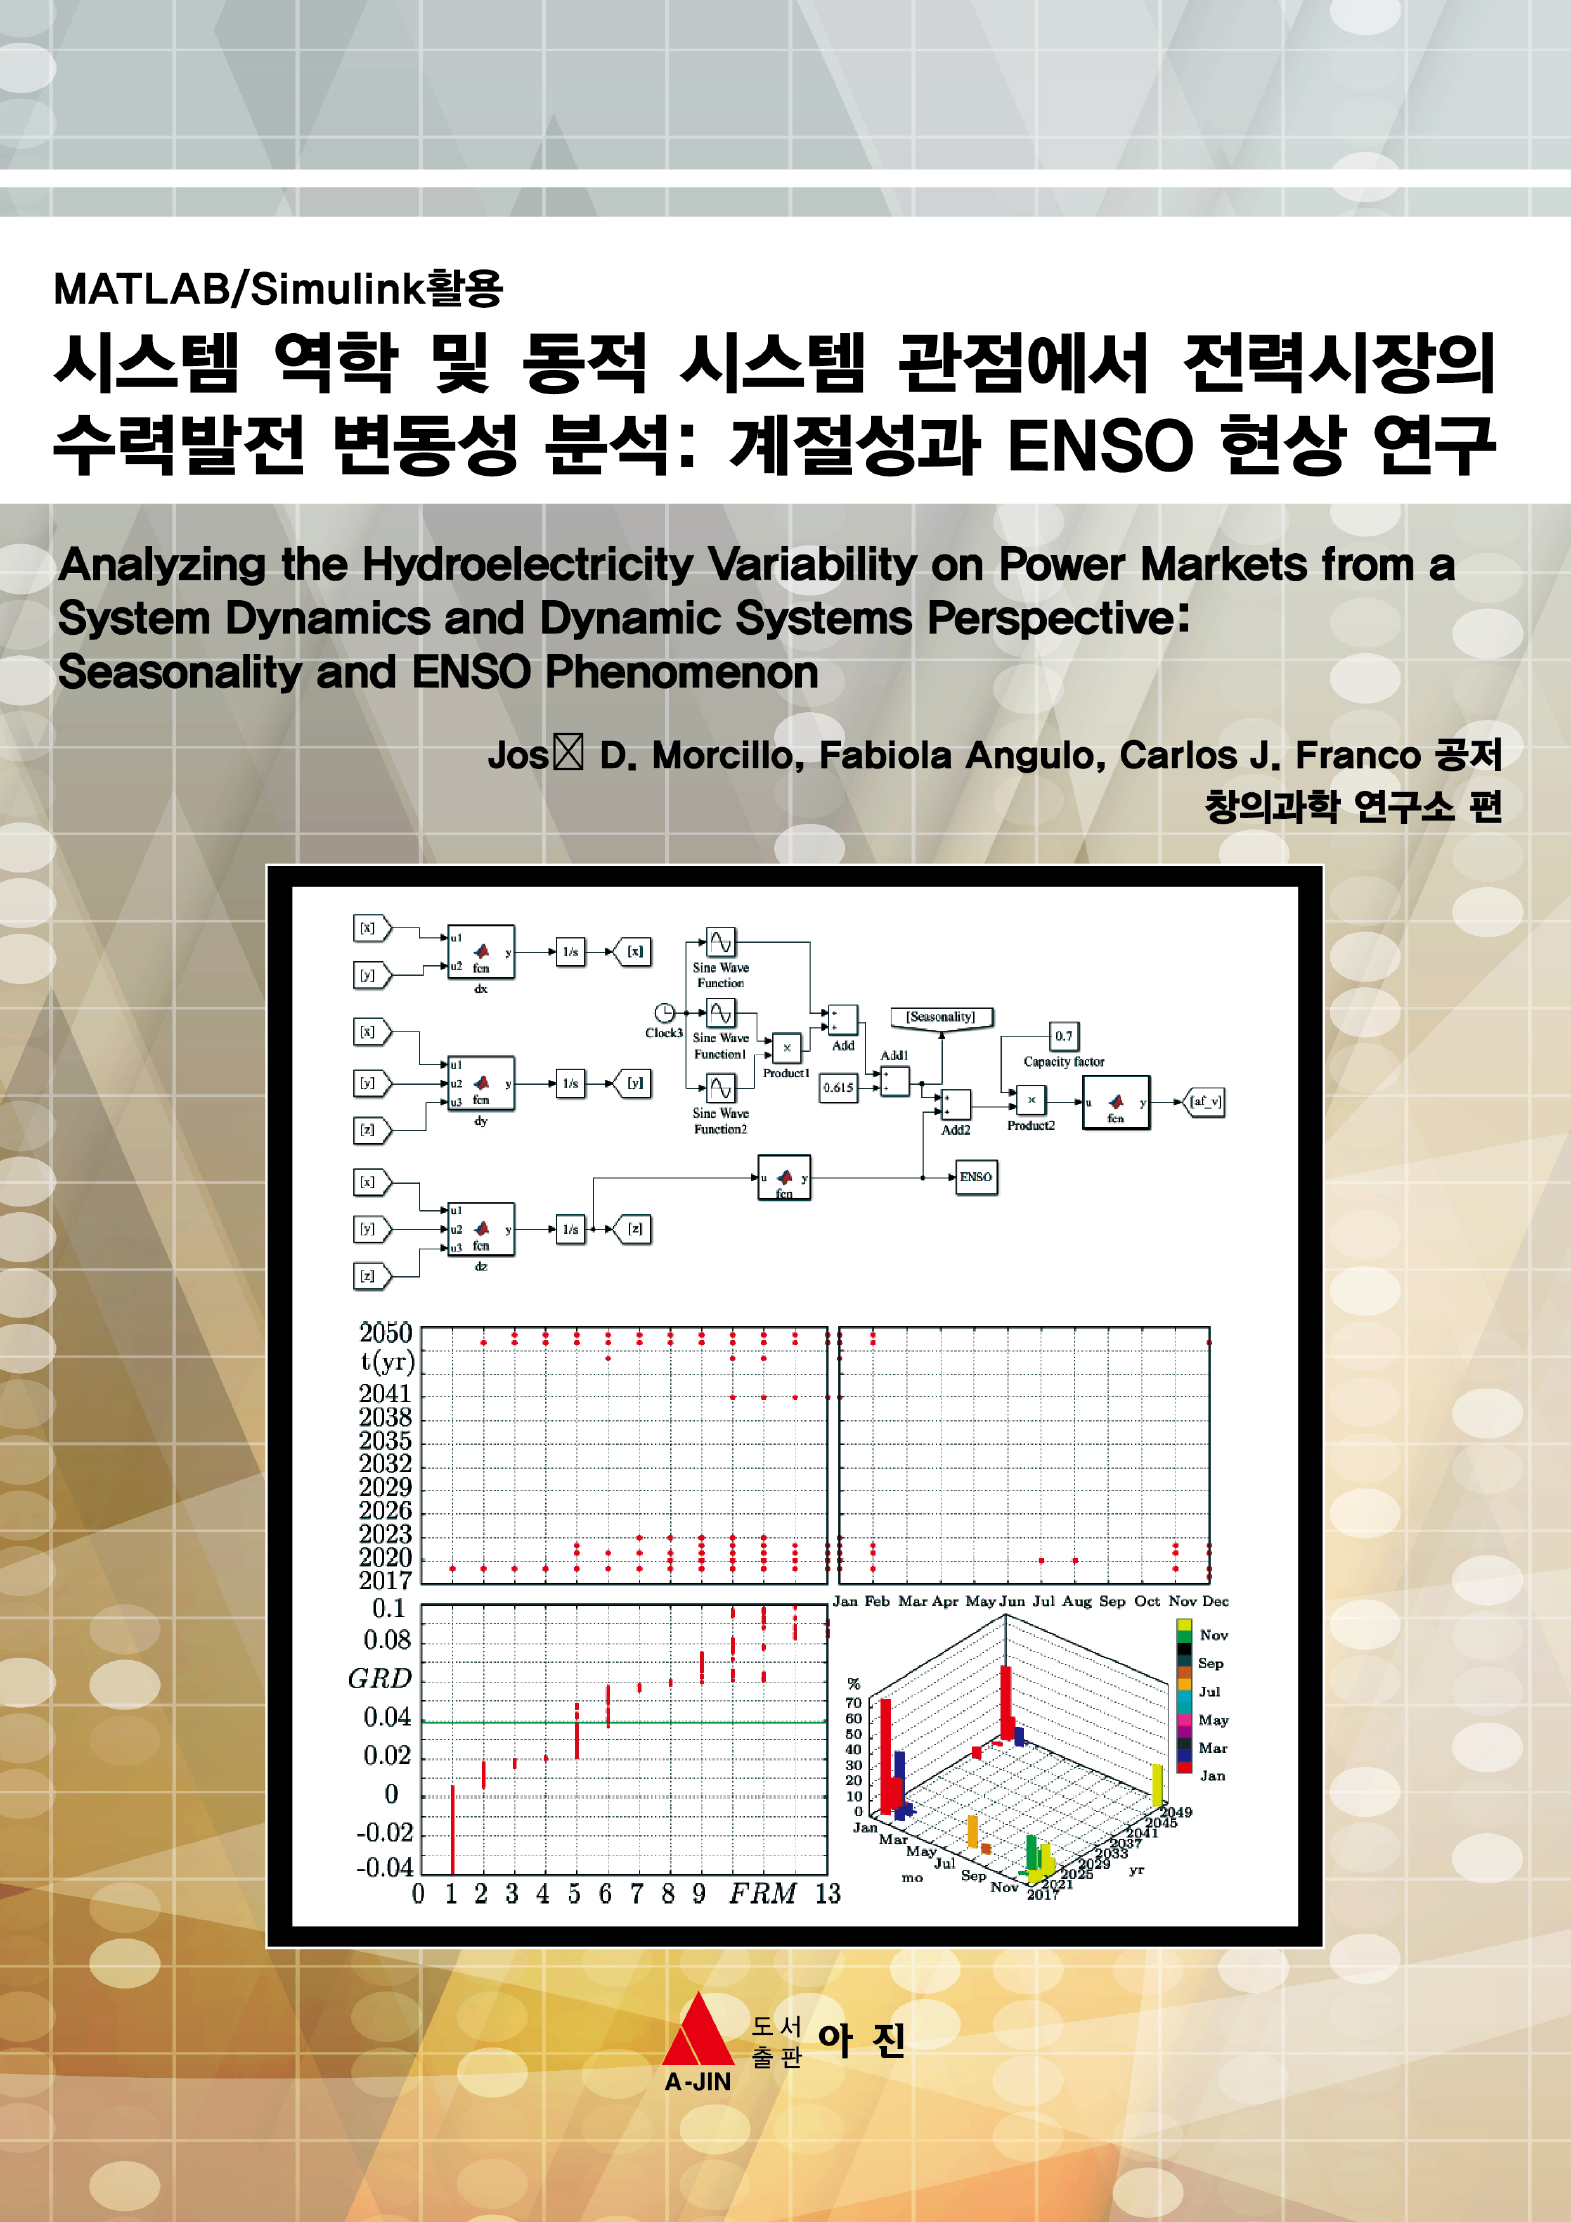 MATLAB/Simulink활용 시스템 역학 및 동적 시스템 관점에서 전력시장의 수력발전 변동성 분석: 계절성과 ENSO 현상 연구